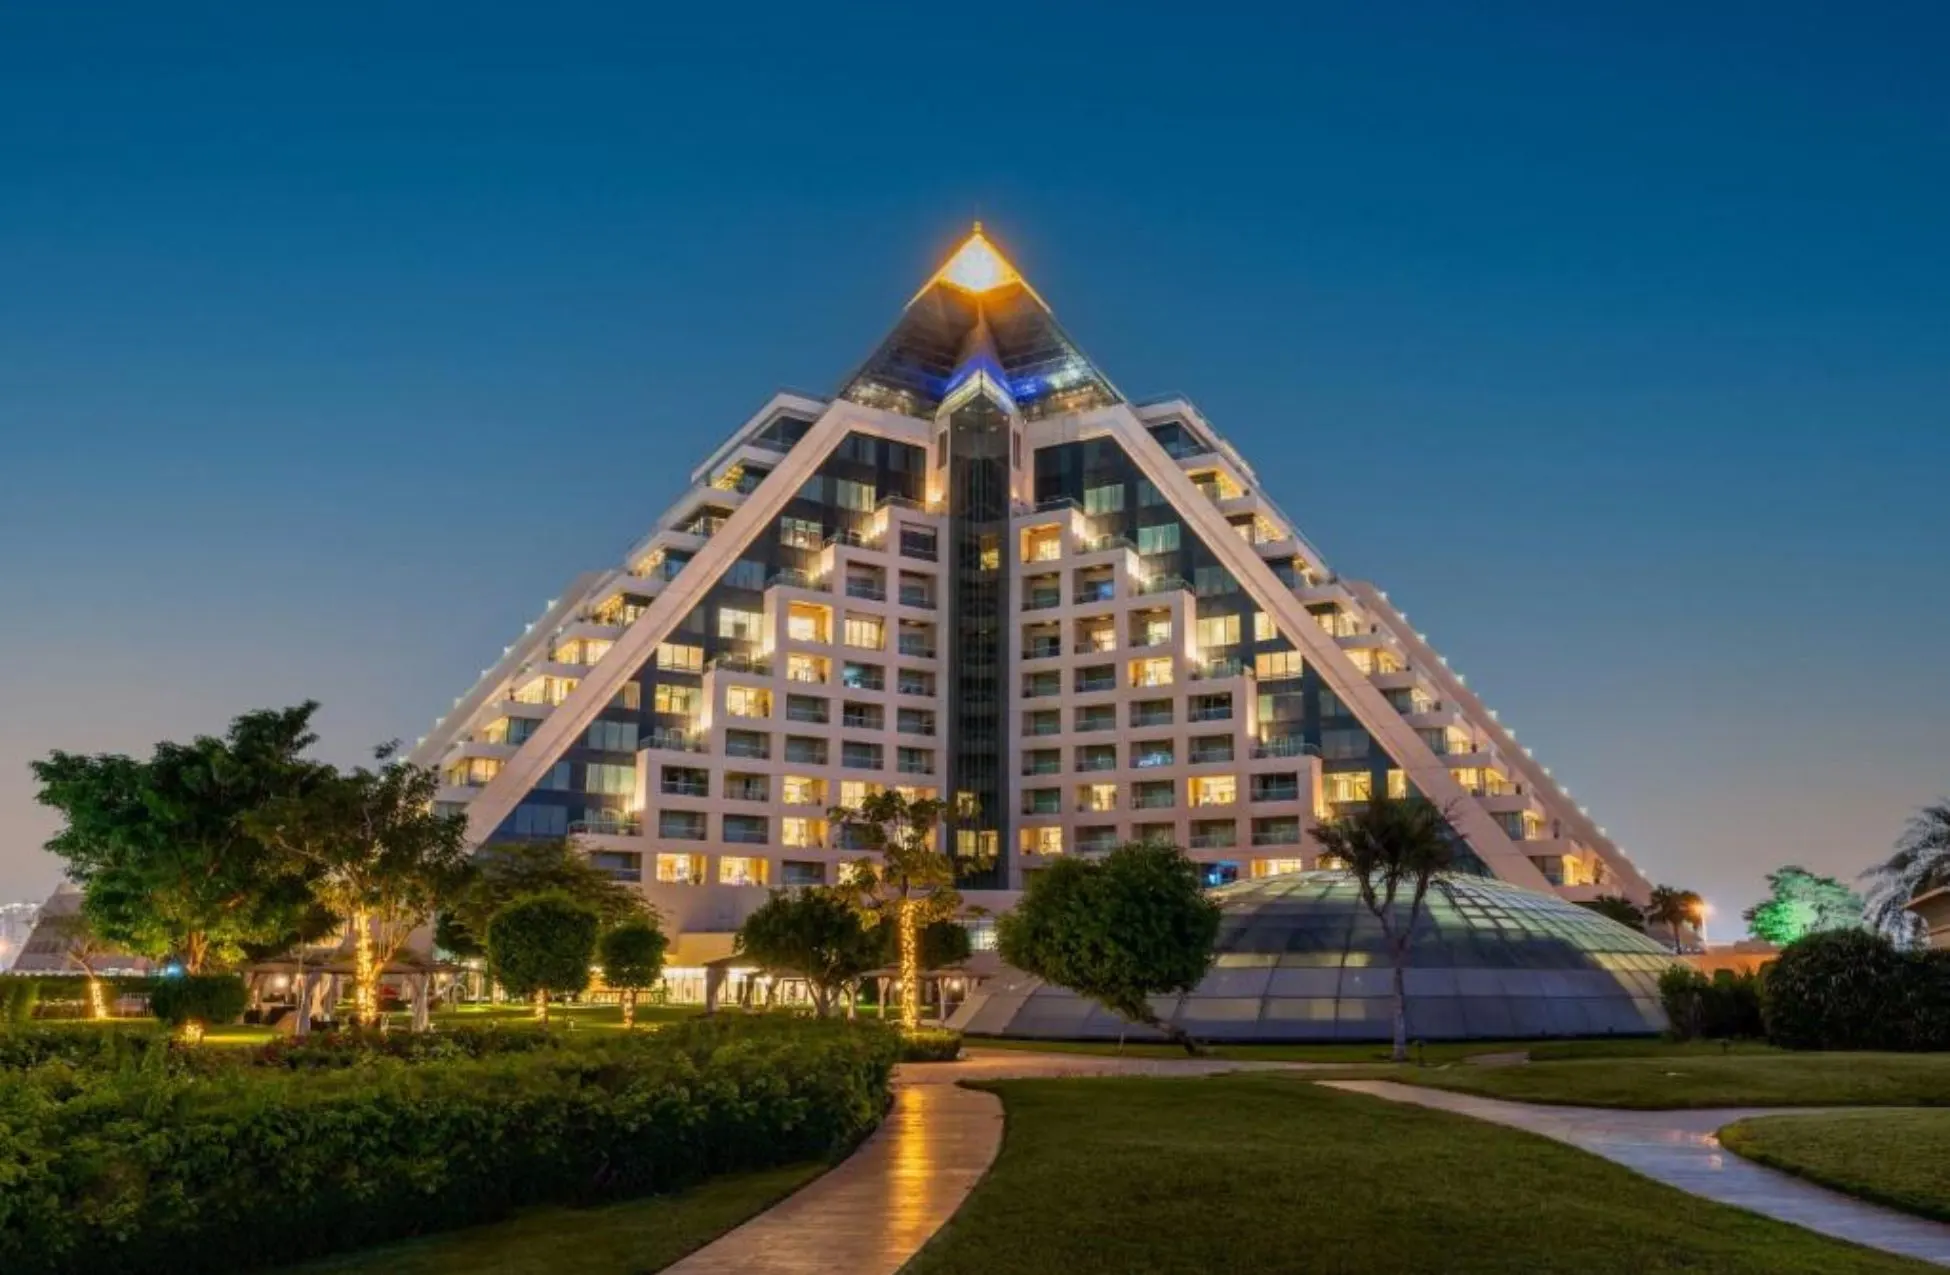 Raffles Dubai - Best Hotels In Dubai